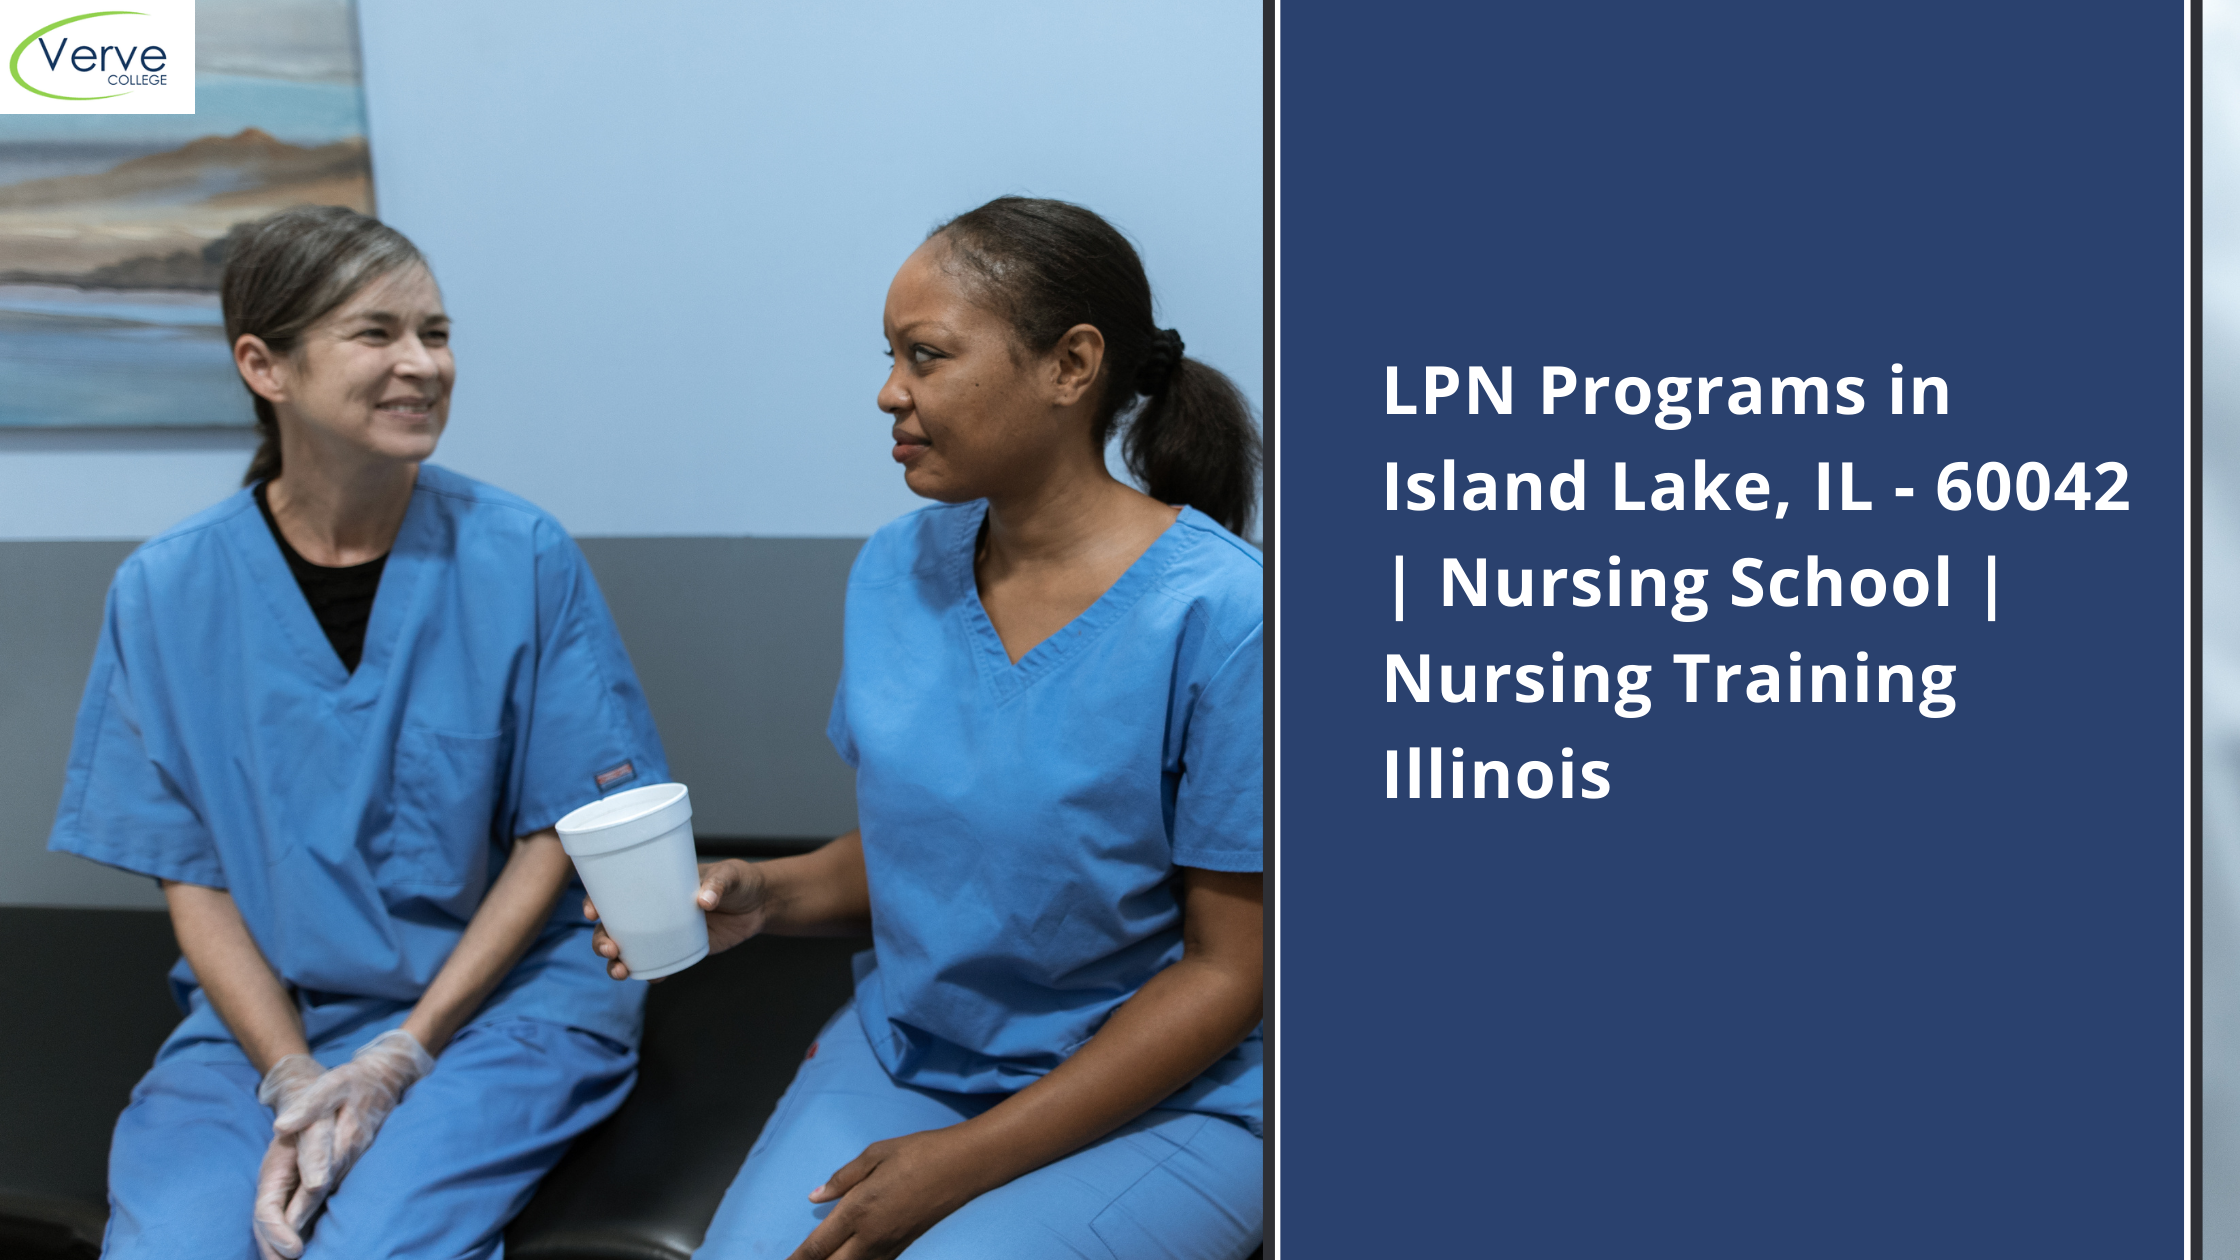 LPN Programs in Island Lake, IL – 60042 | Nursing School | Nursing Training Illinois